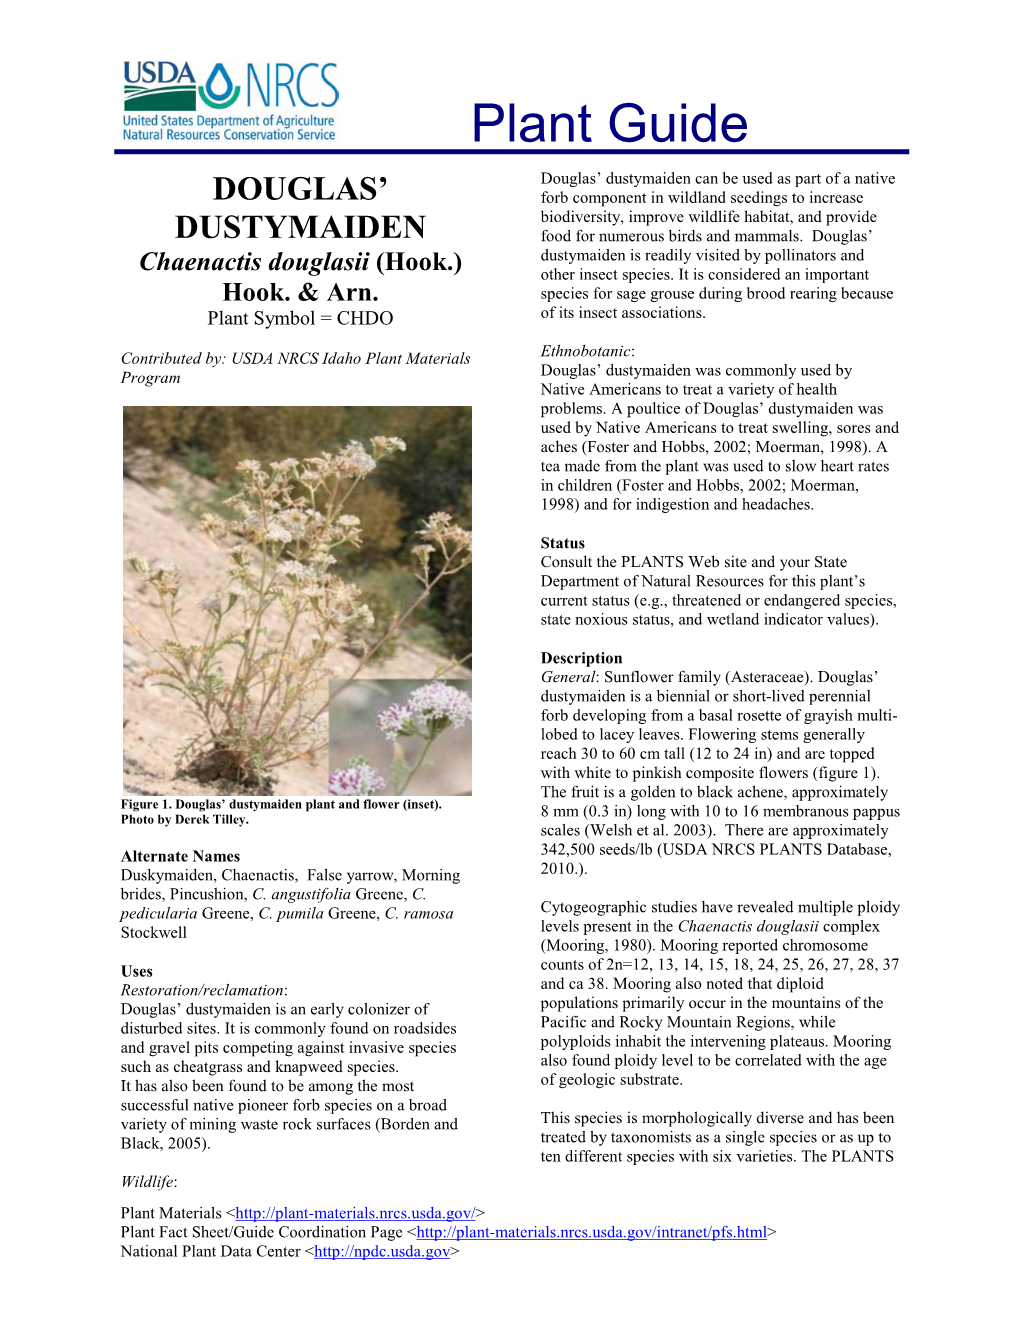 Plant Guide: Douglas' Dusty-Maiden (Chaenactic Douglasii)